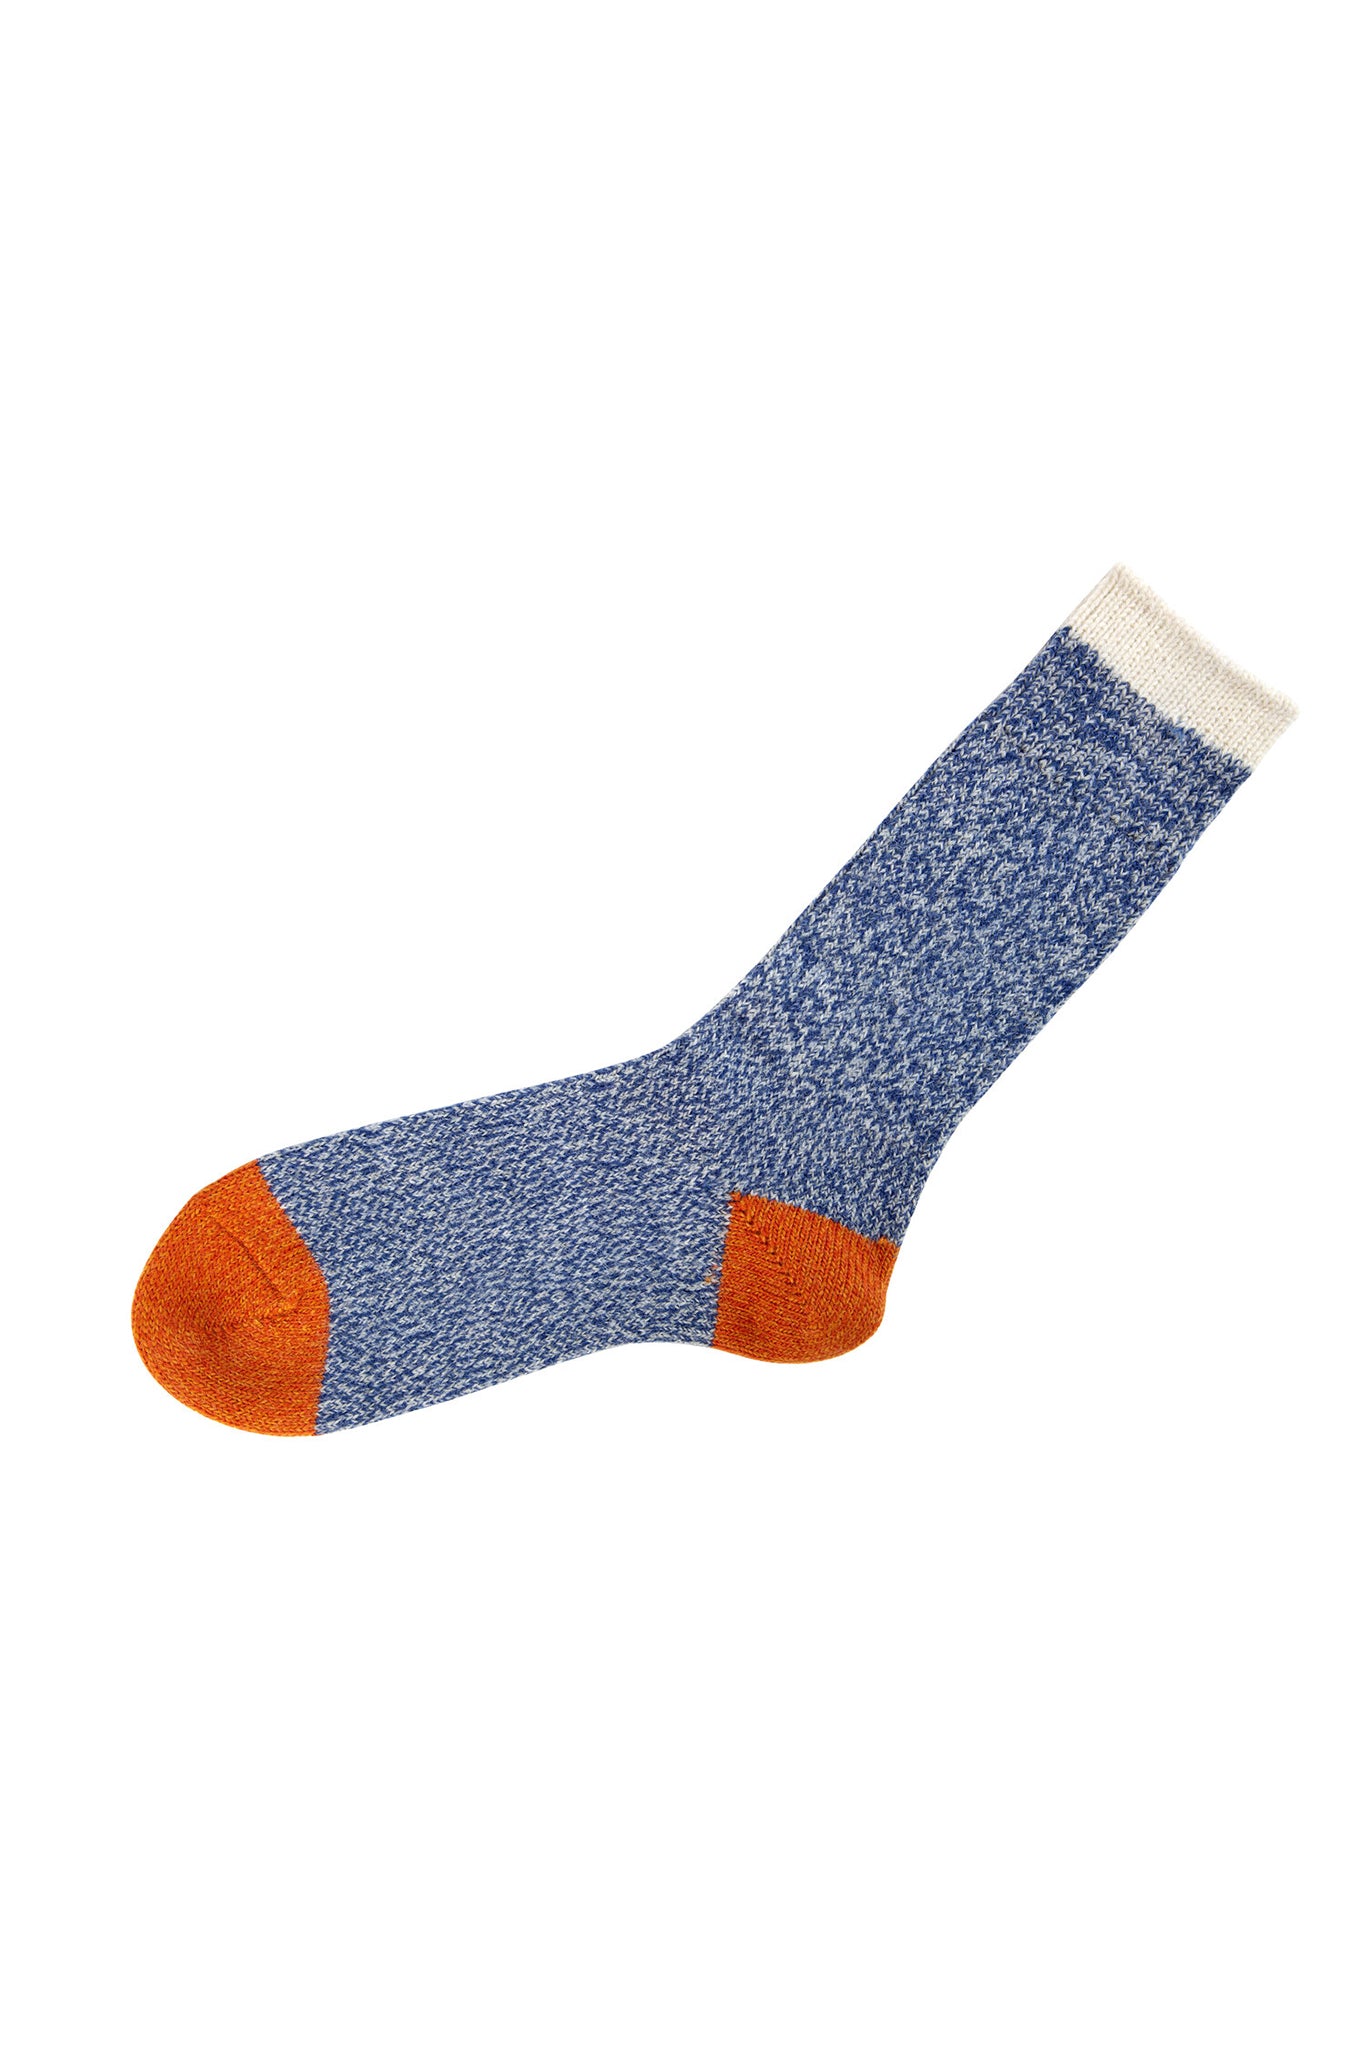 Pata Paca Socks - Melange Blue + Orange